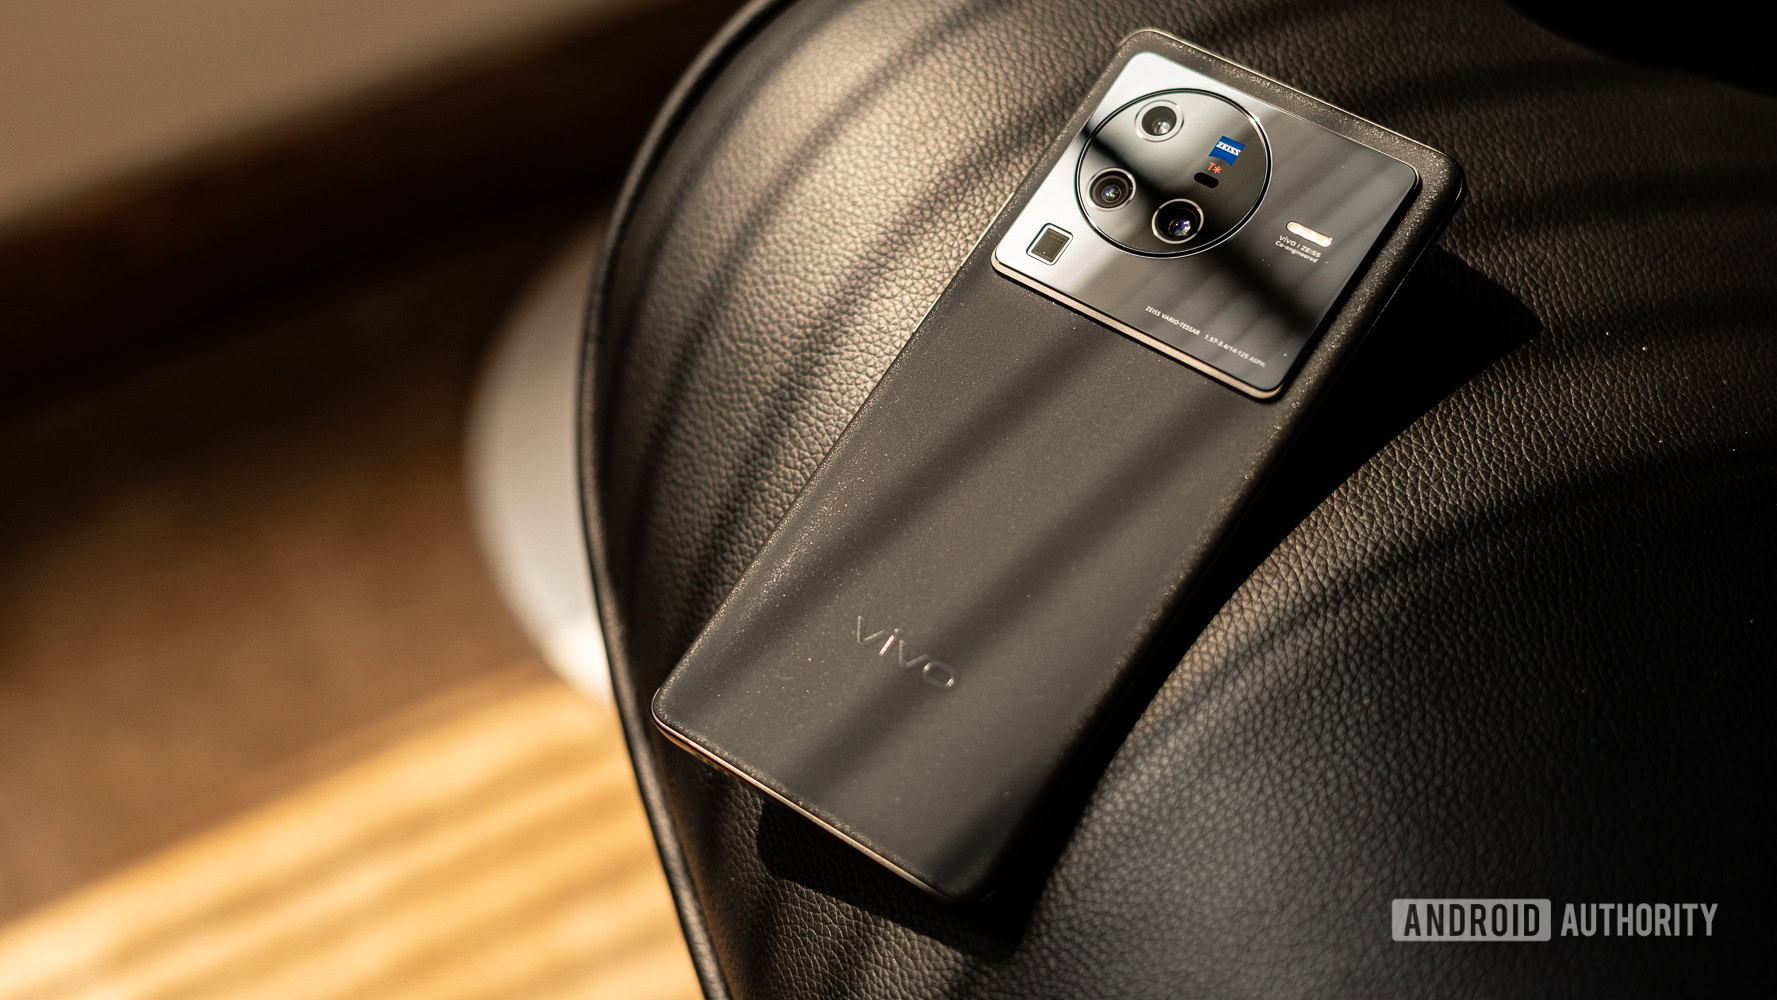 Vivo X80 Pro Review: The Best Camera Gets (Slightly) Better - Tech Advisor